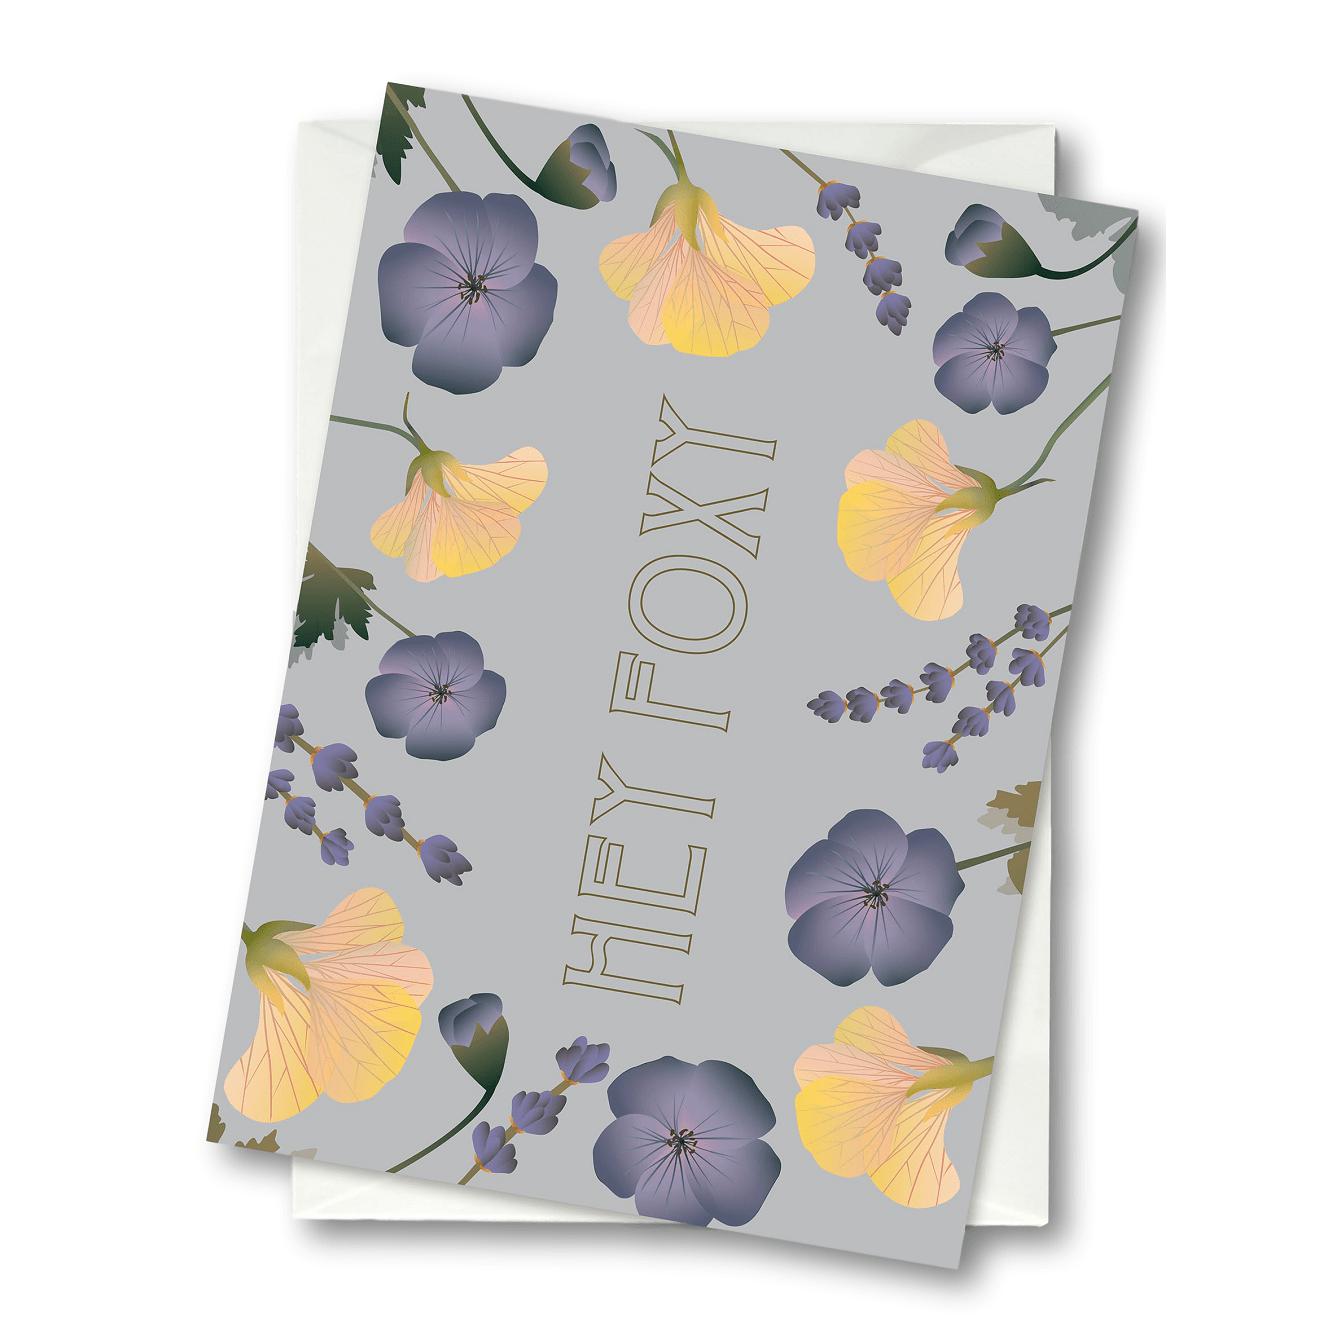 Vissevasse Hey Foxy Flower Bouquet Greeting Card, 10,5x15cm